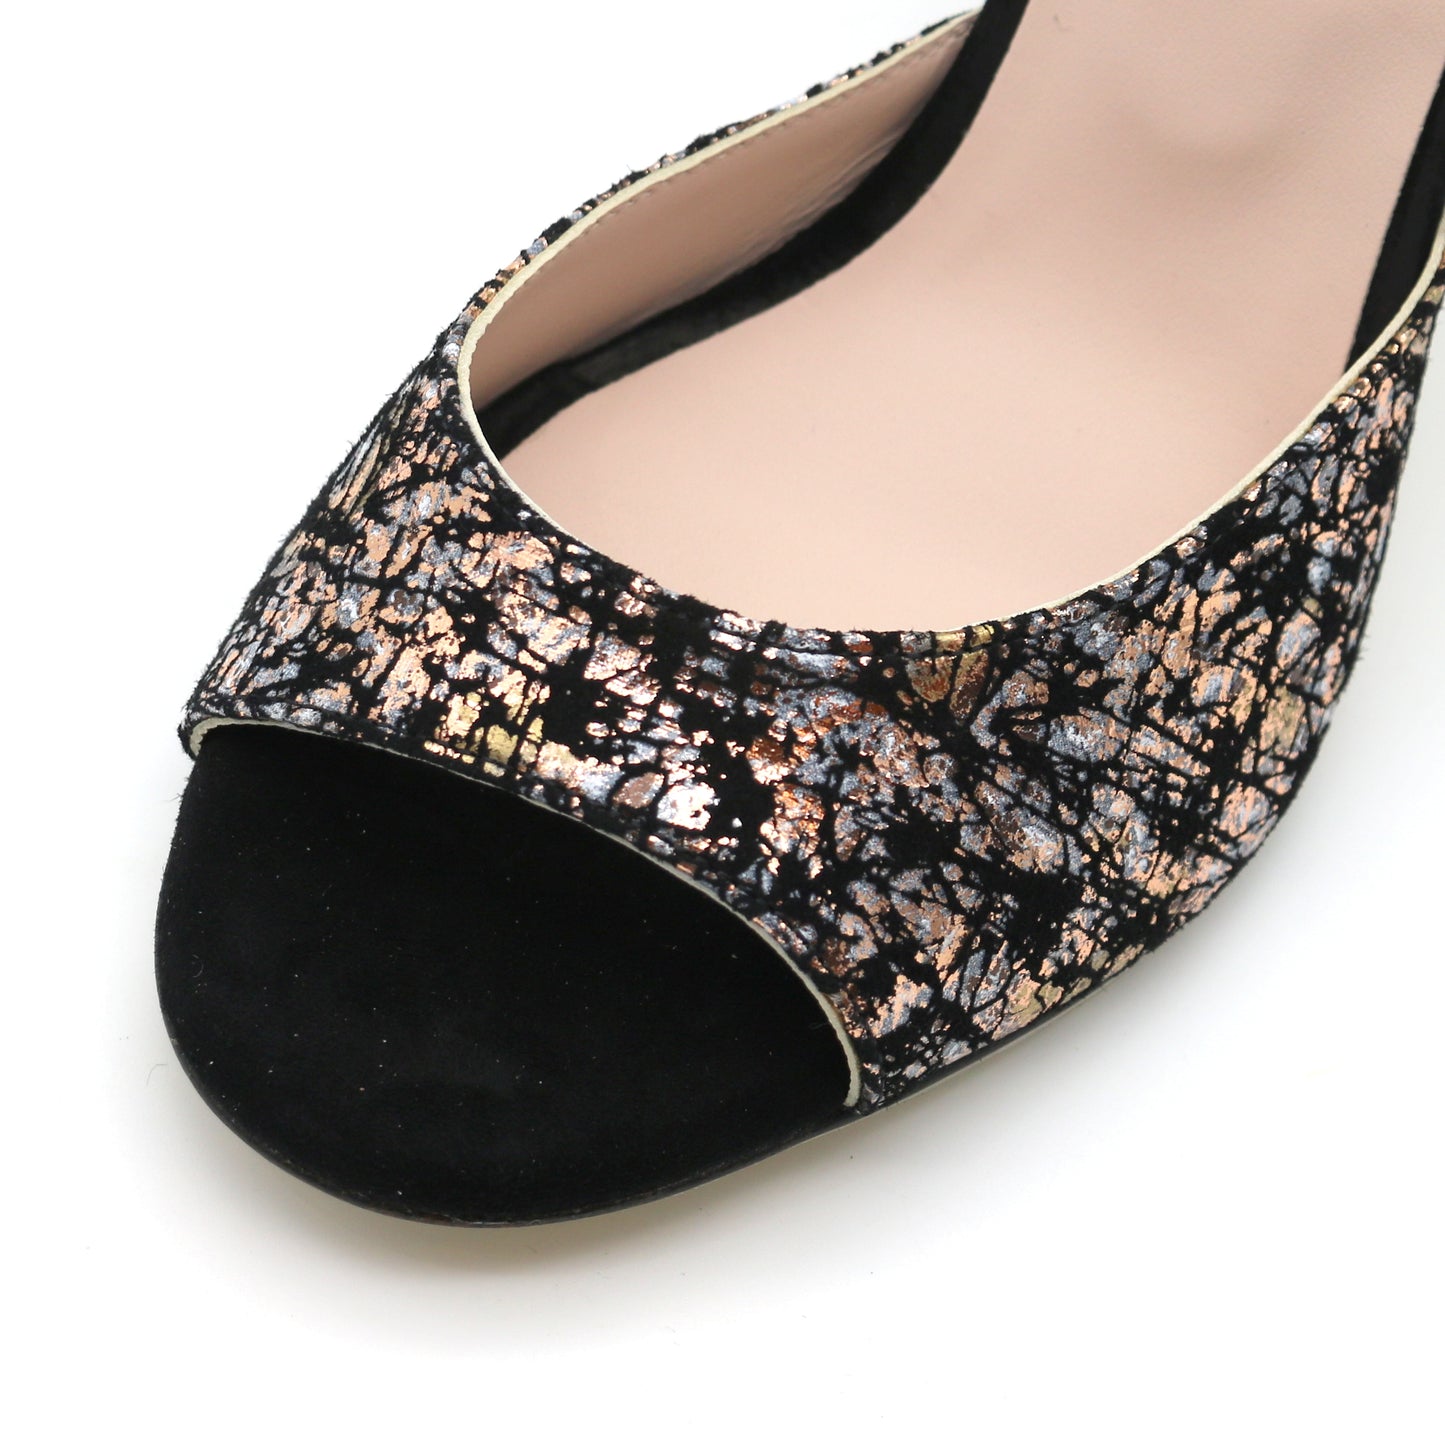 Picaflor black suede and print 8cm heels